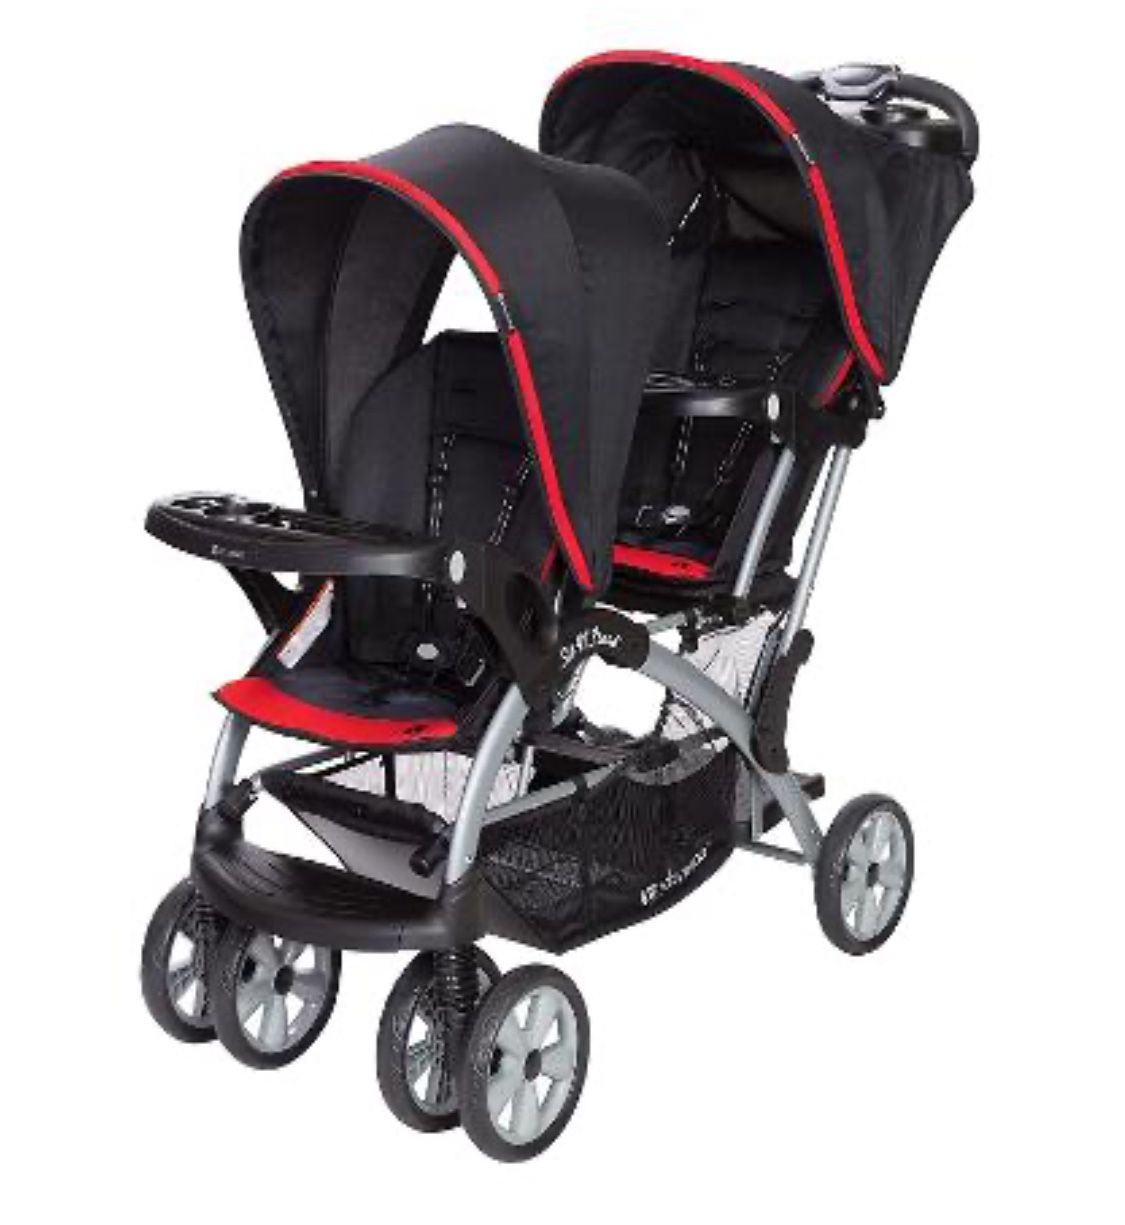 Baby Trends Double Stroller